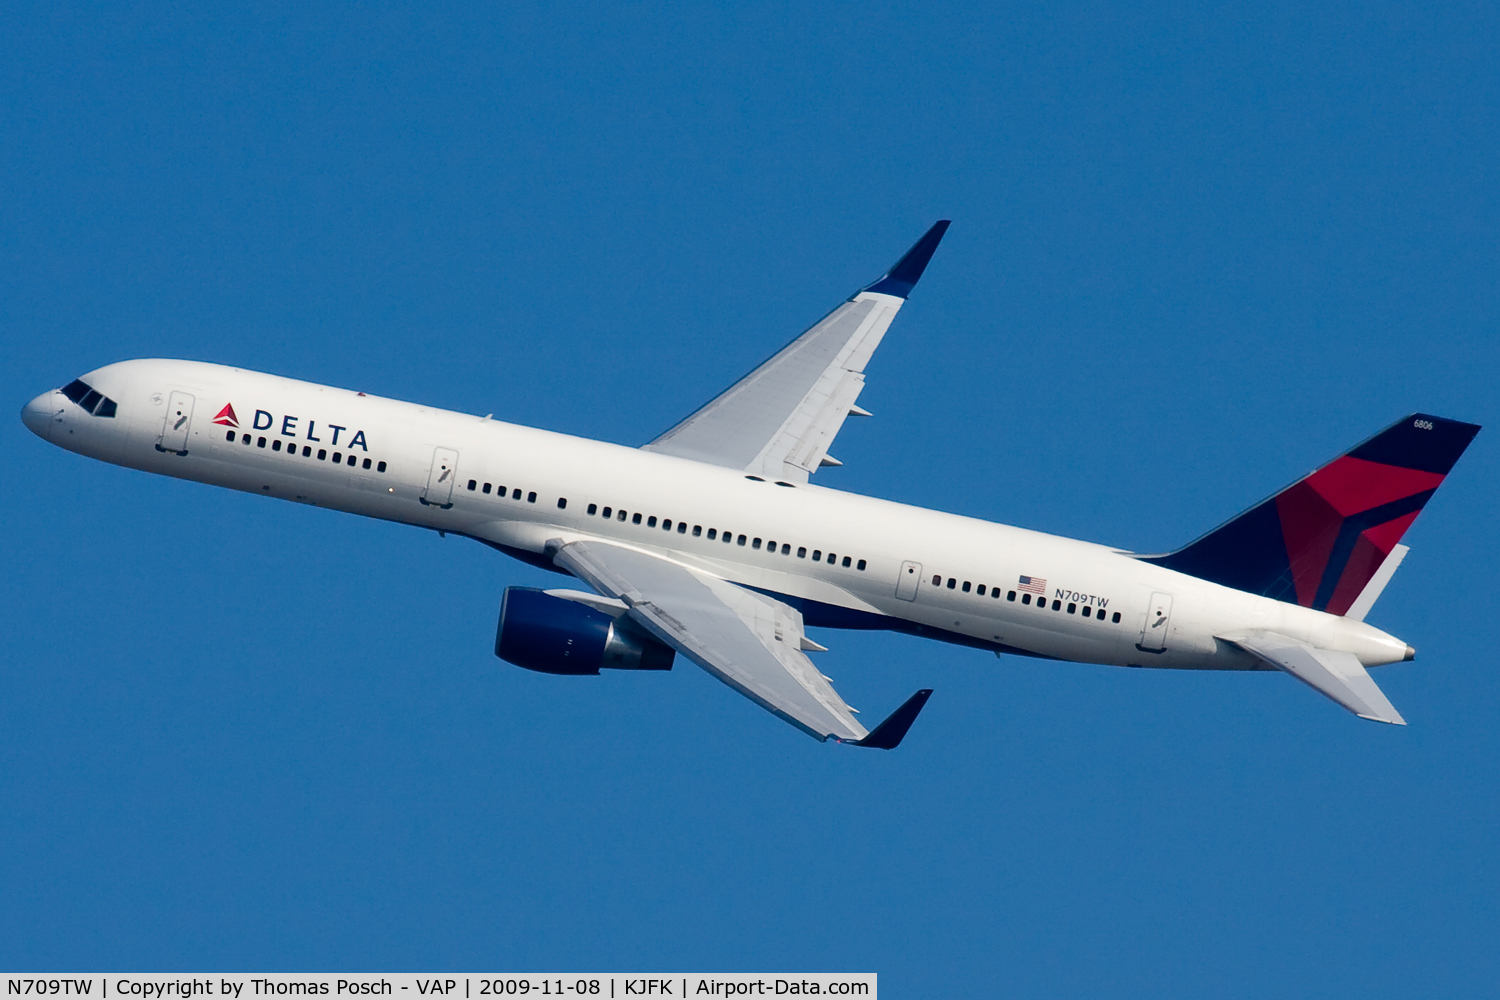 N709TW, 1997 Boeing 757-2Q8 C/N 28168, Delta Airlines